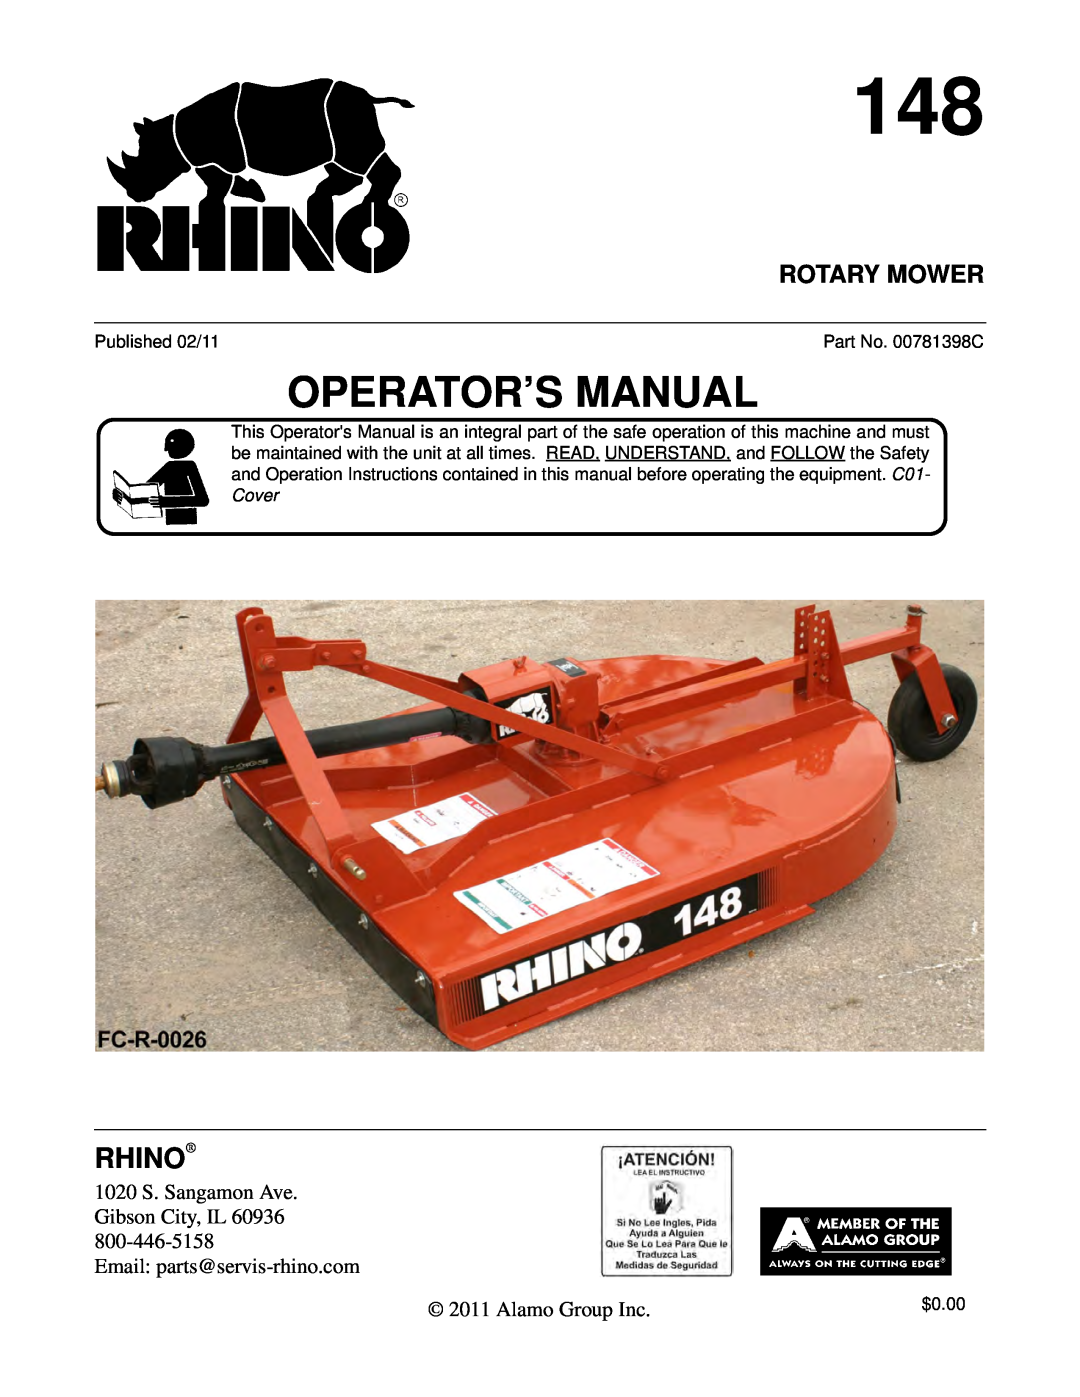 Rhino Mounts 148 manual Rhino, Rotary Mower, Operator’S Manual 